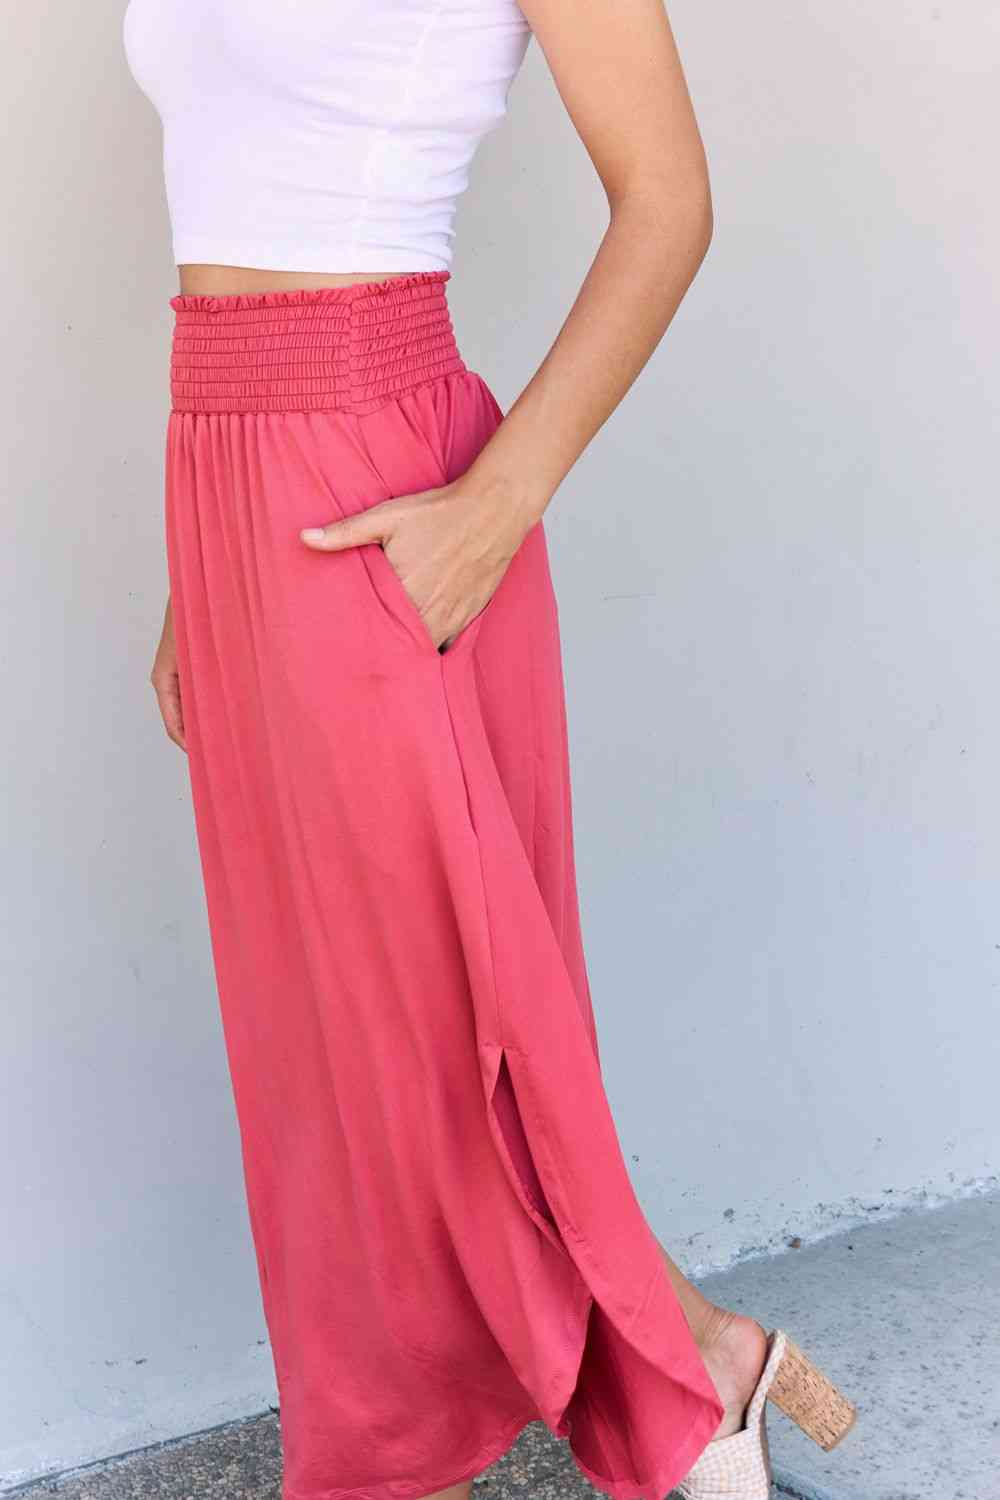 Doublju Comfort Princess Full Size High Waist Scoop Hem Maxi Skirt in Hot Pink - Just Enuff Sexy